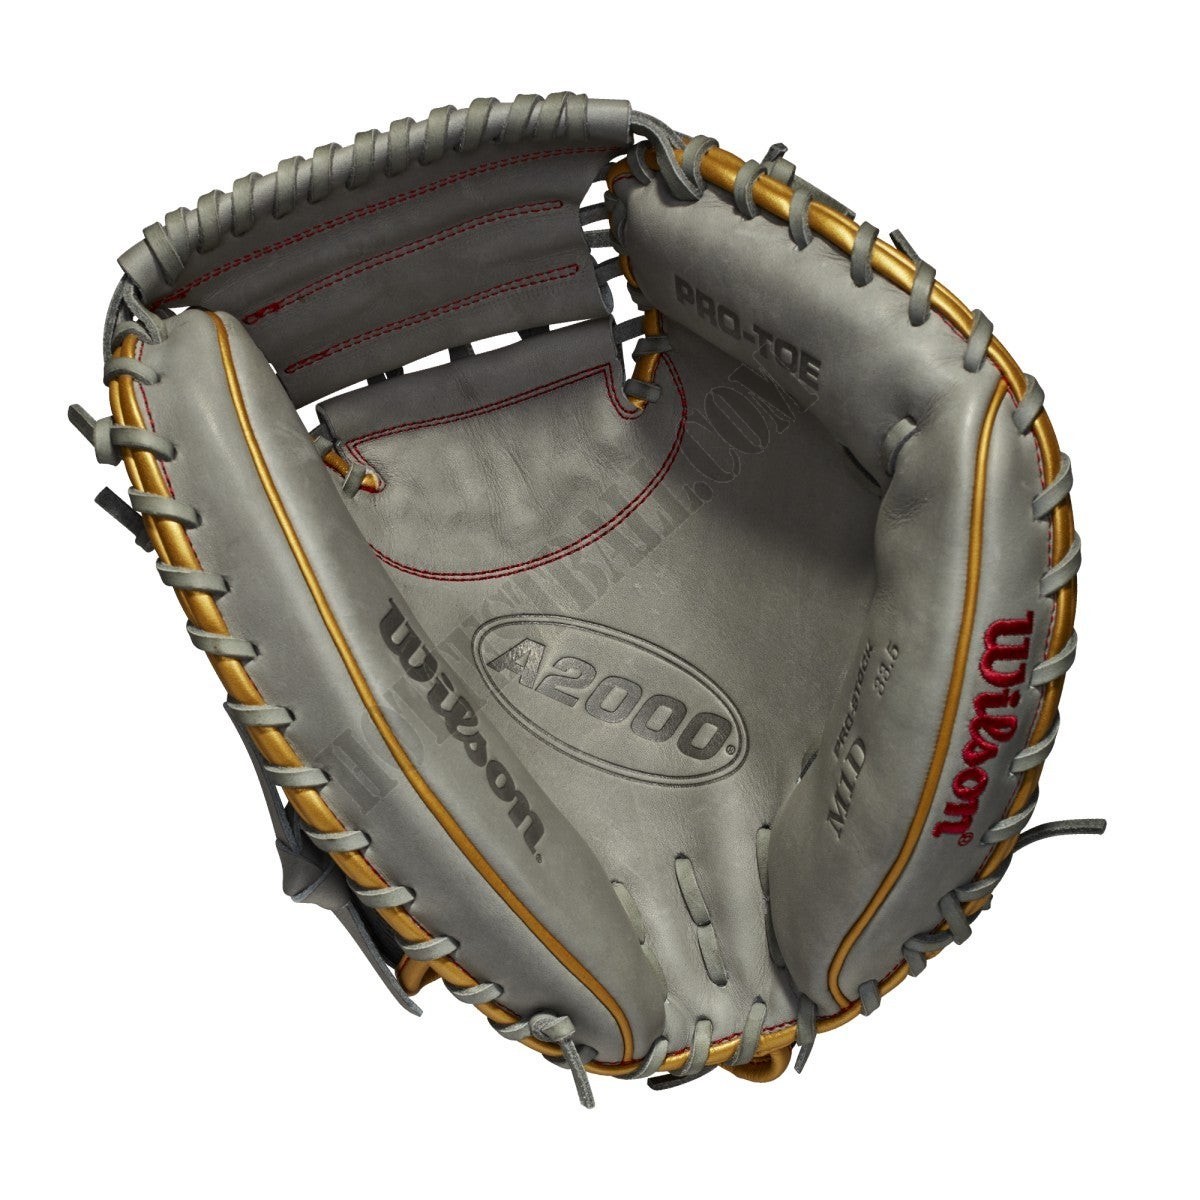 2020 A2000 M1D Catcher's Baseball Mitt - Limited Edition ● Wilson Promotions - -2